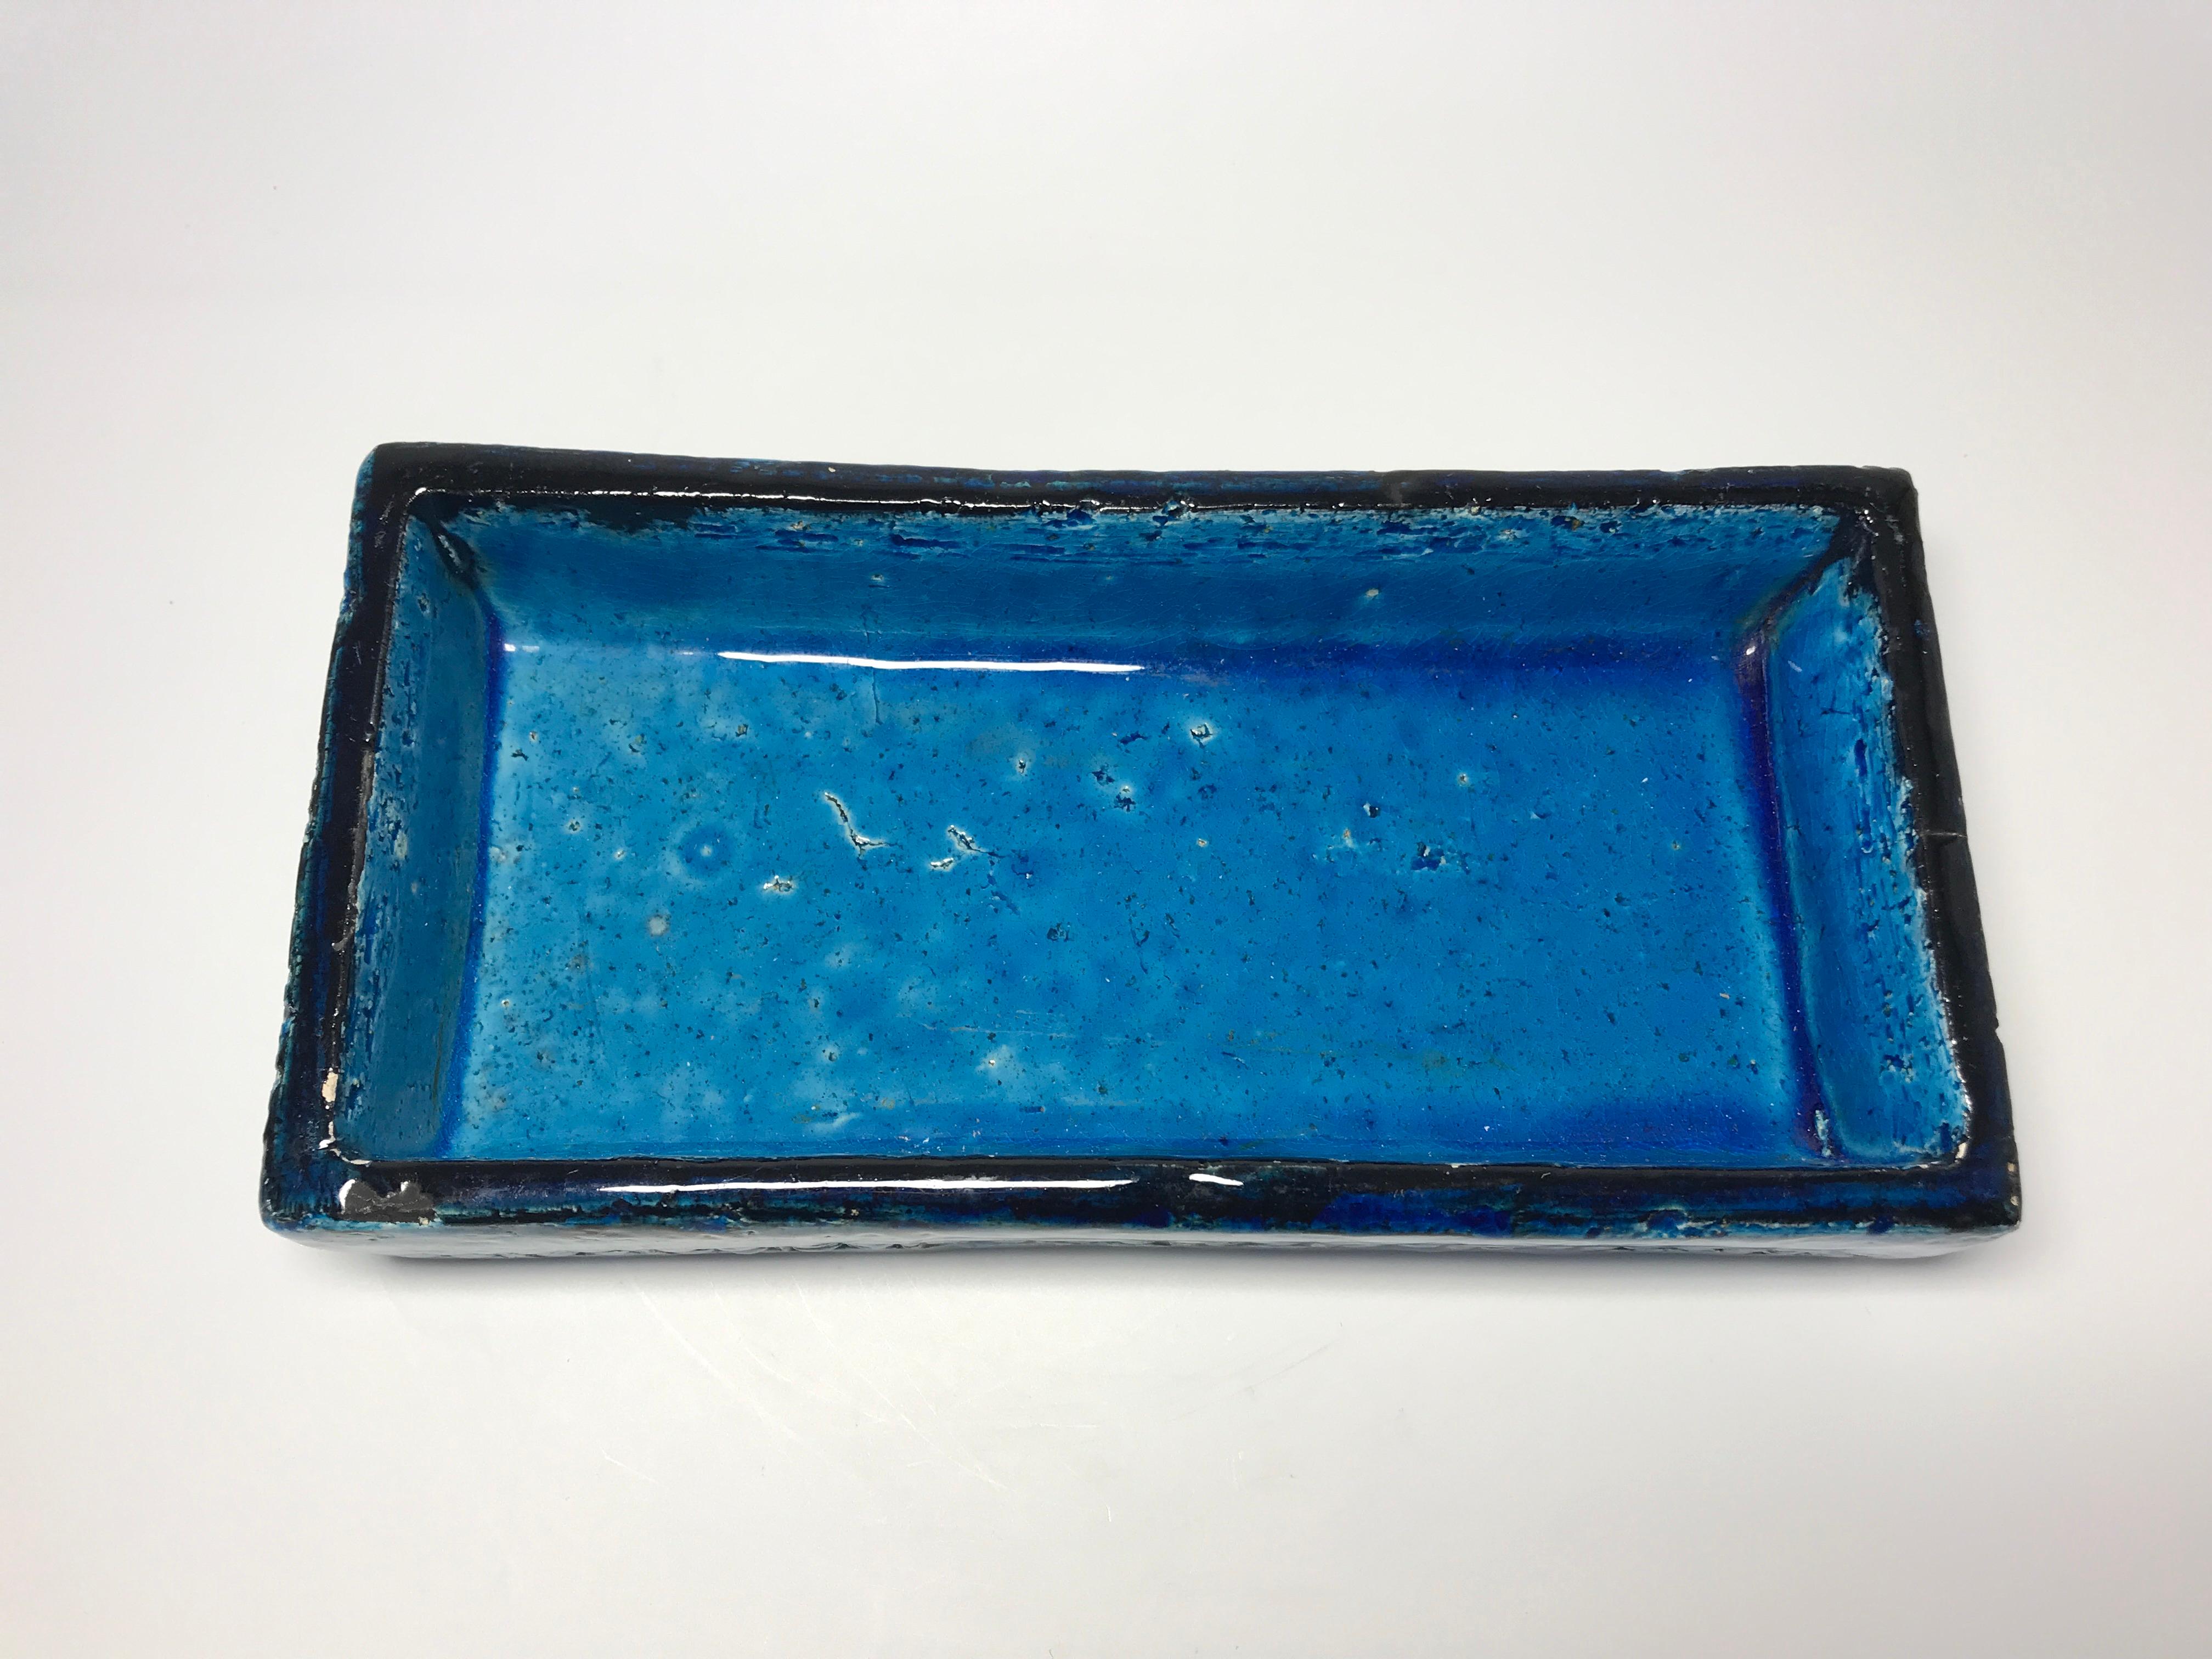 Glazed Rimini Blue and Green Bitossi Studio of Italy, 1960s Oblong Ceramic Lidded Box For Sale